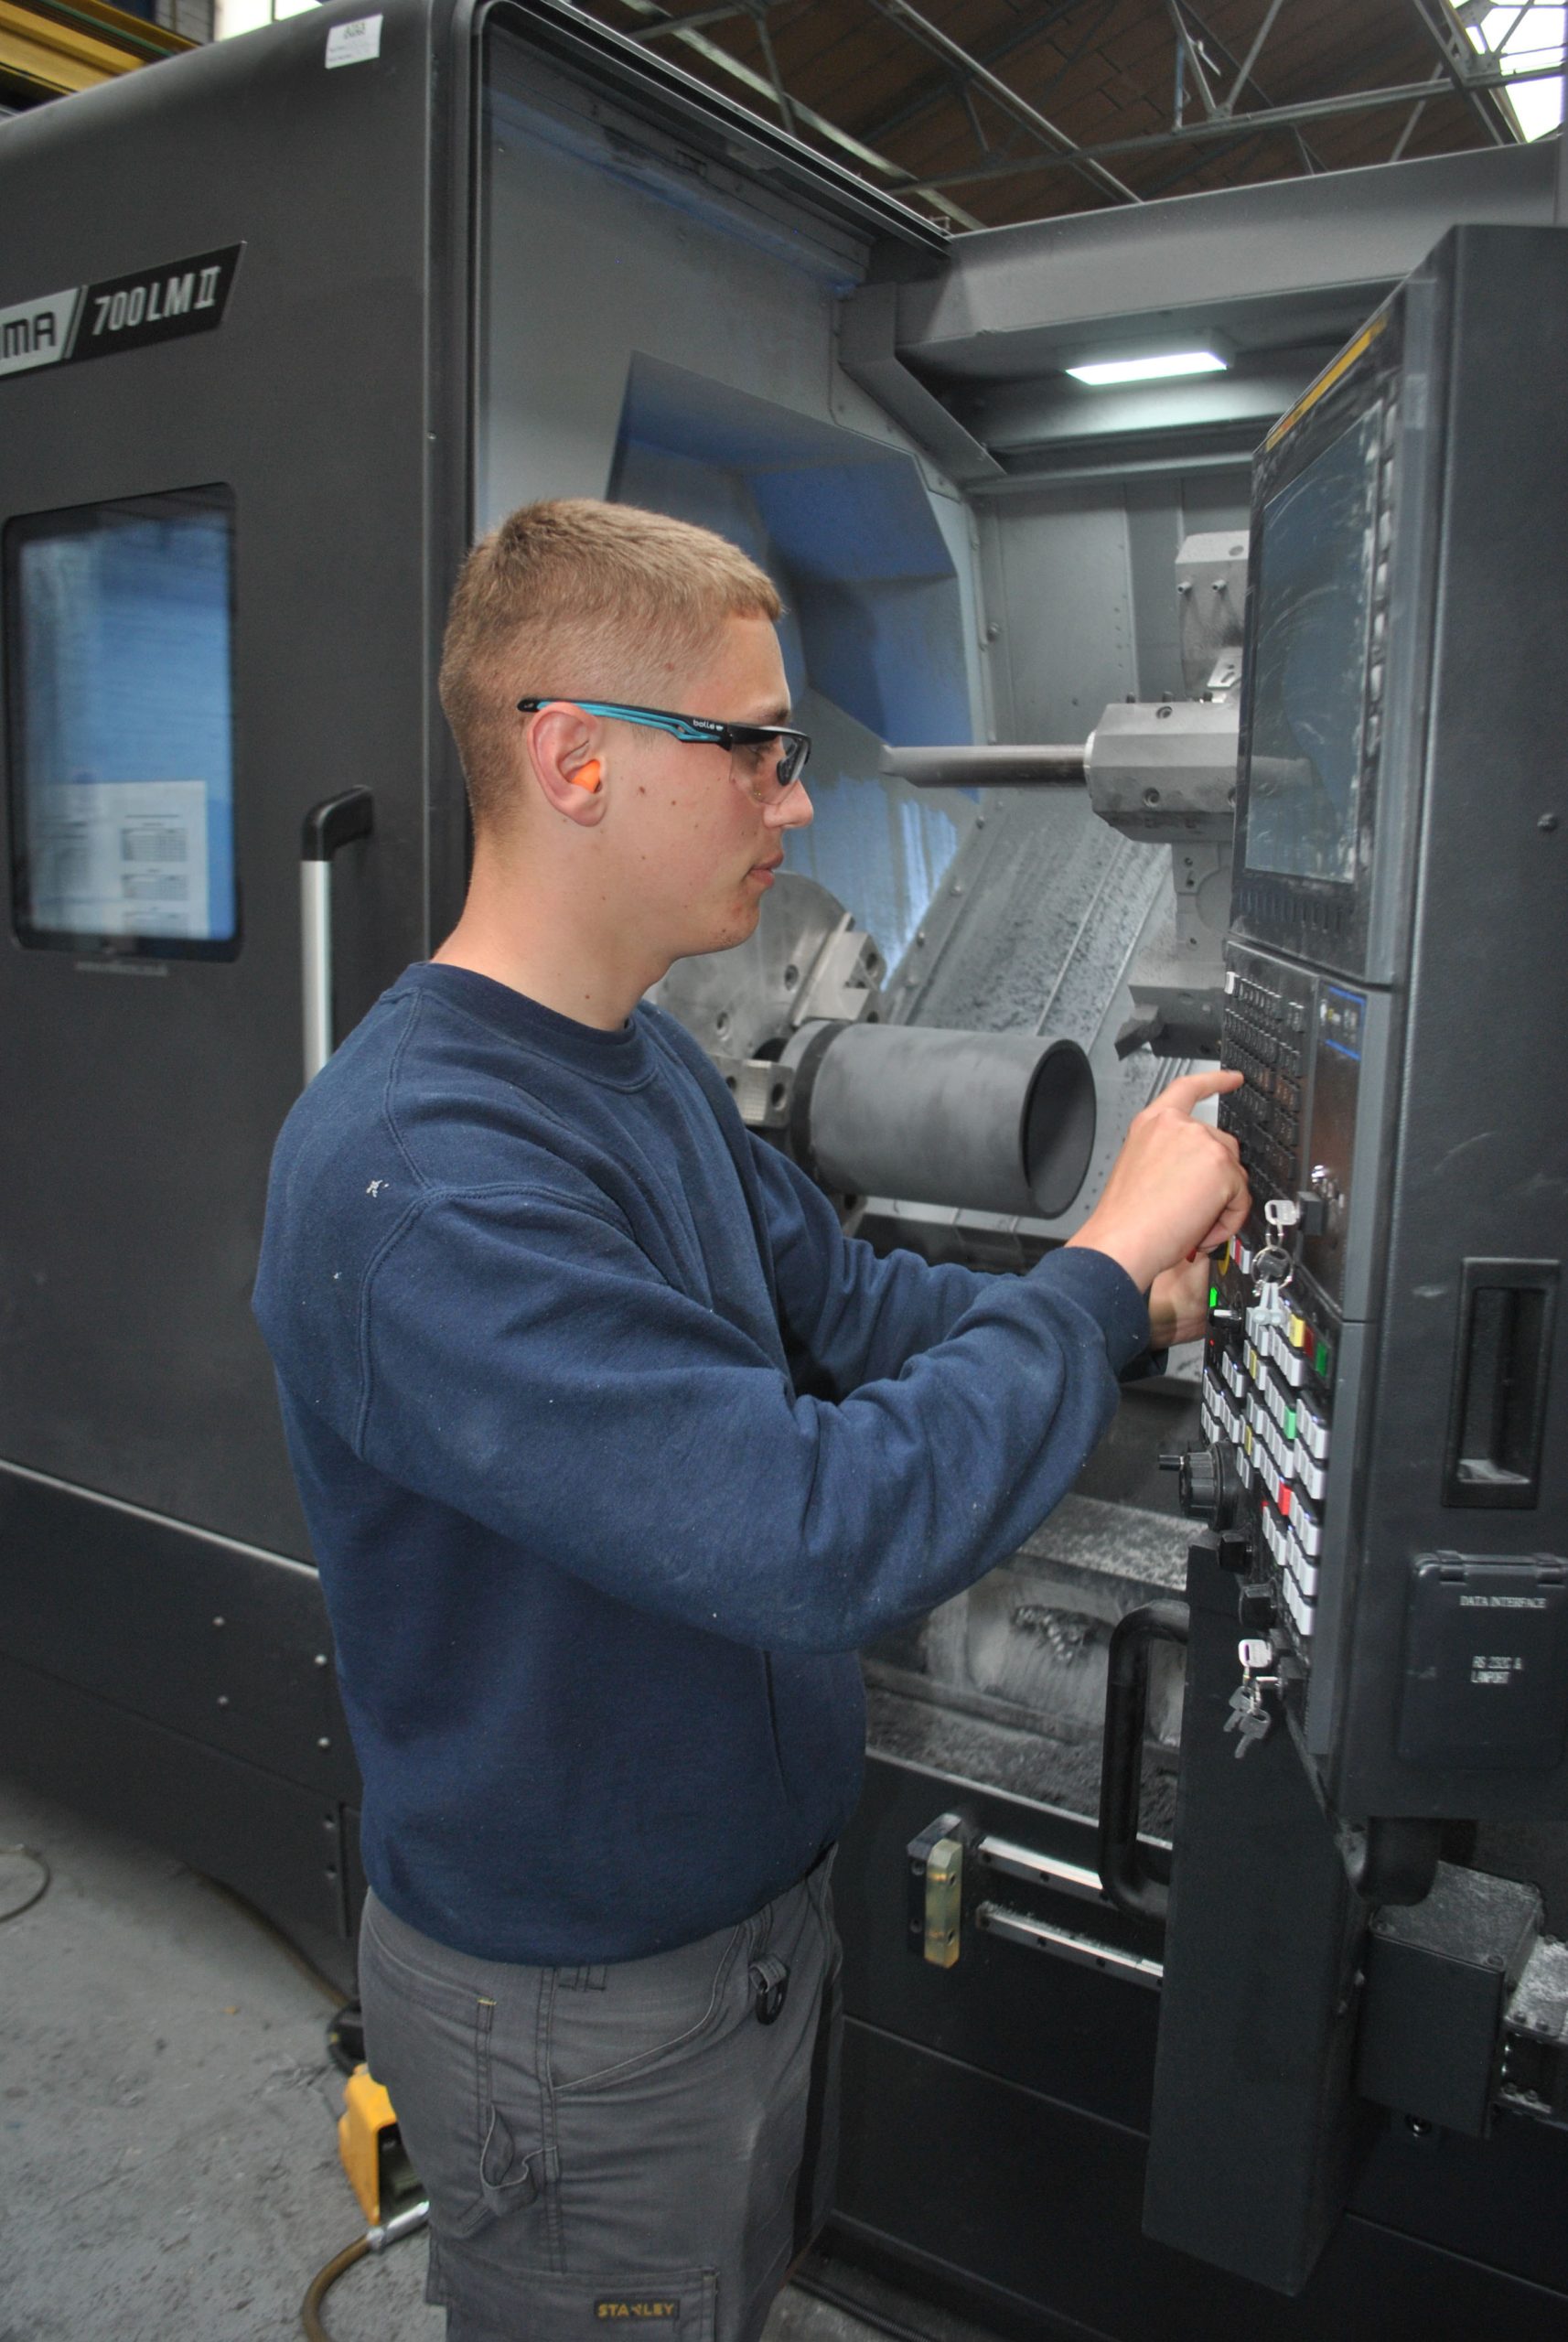 Operator using a Puma 700LM II large-capacity, multi-tasking lathe at Tufcot Engineering